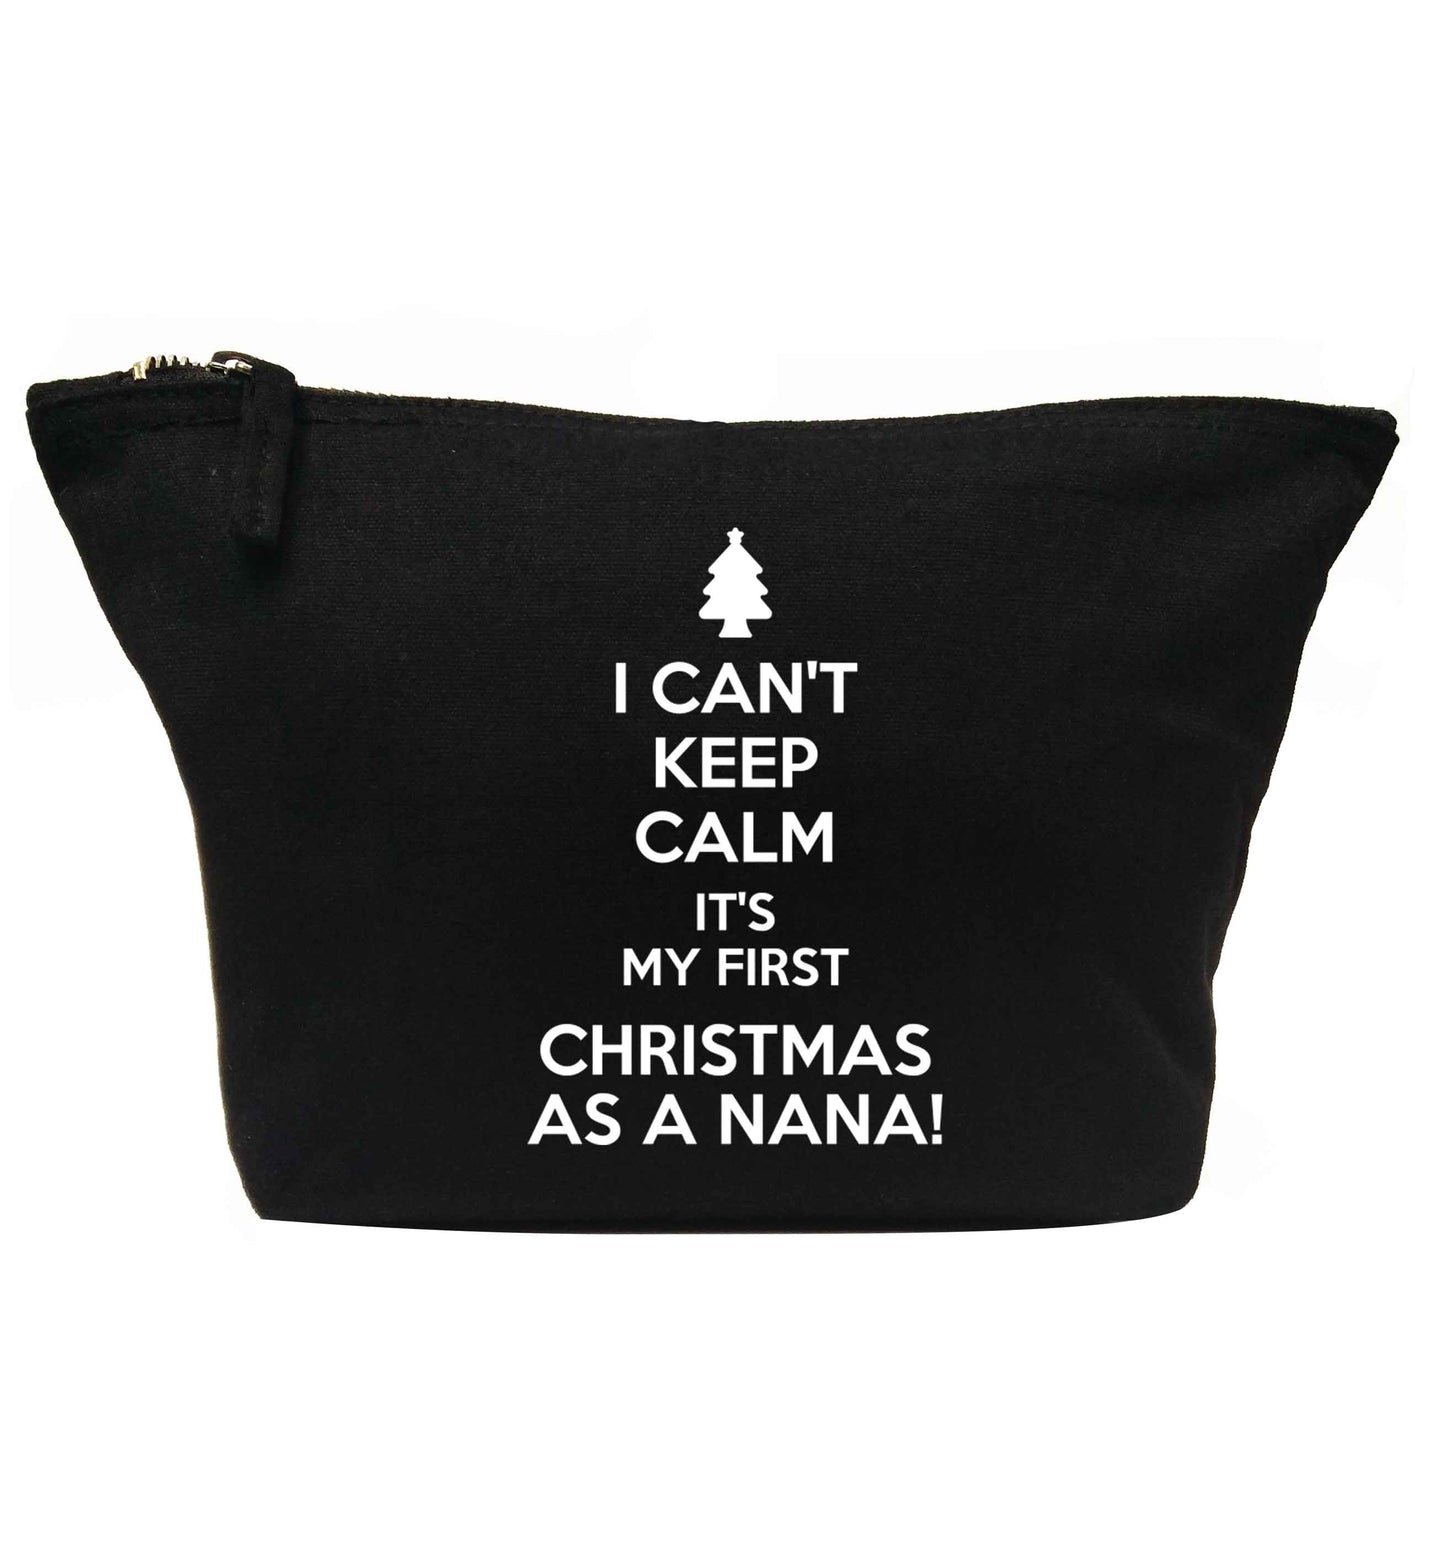 I can't keep calm it's my first Christmas as a nana! | makeup / wash bag